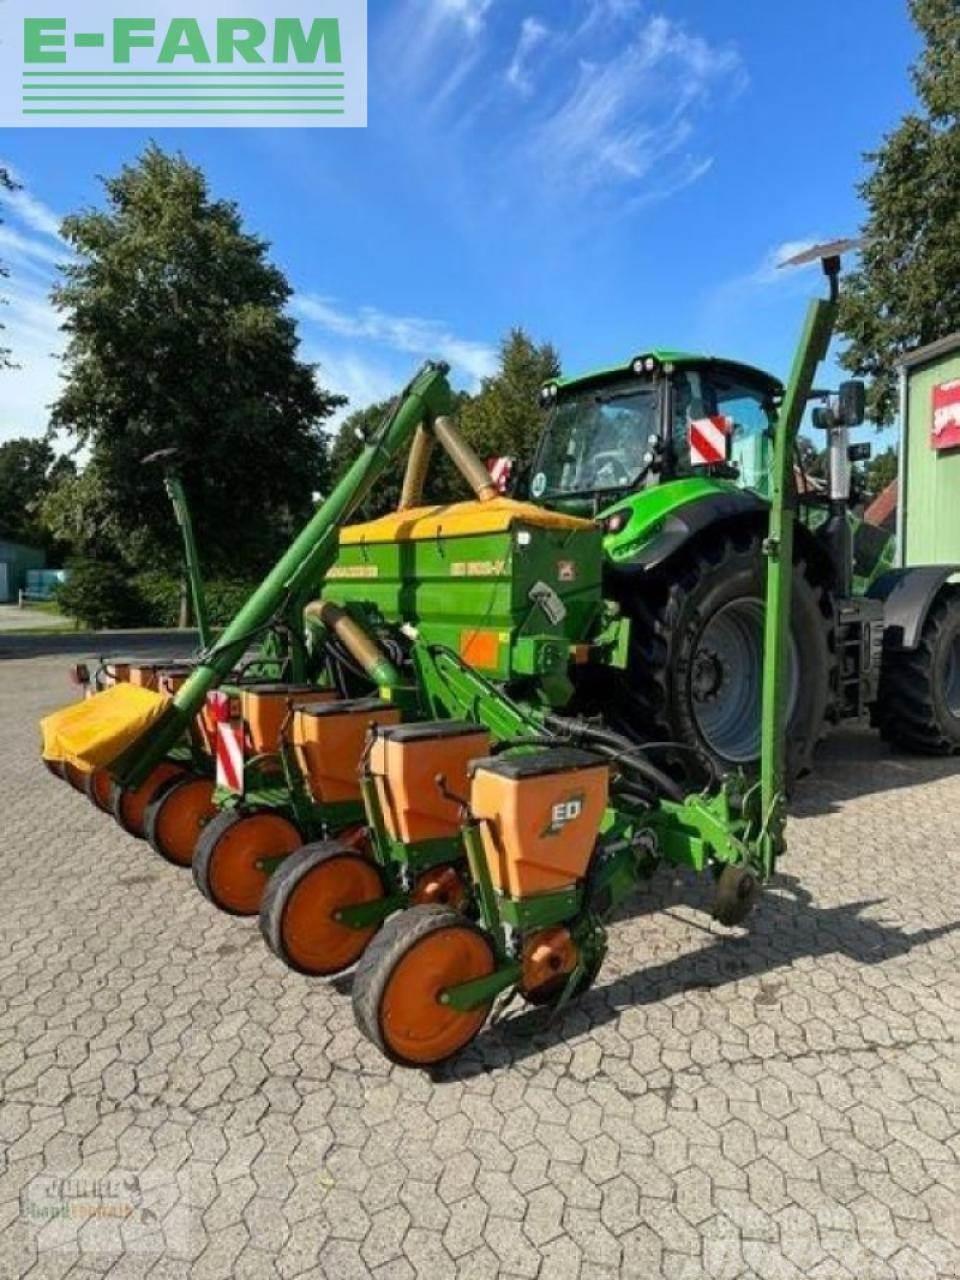 Amazone ed 602 k Sowing machines